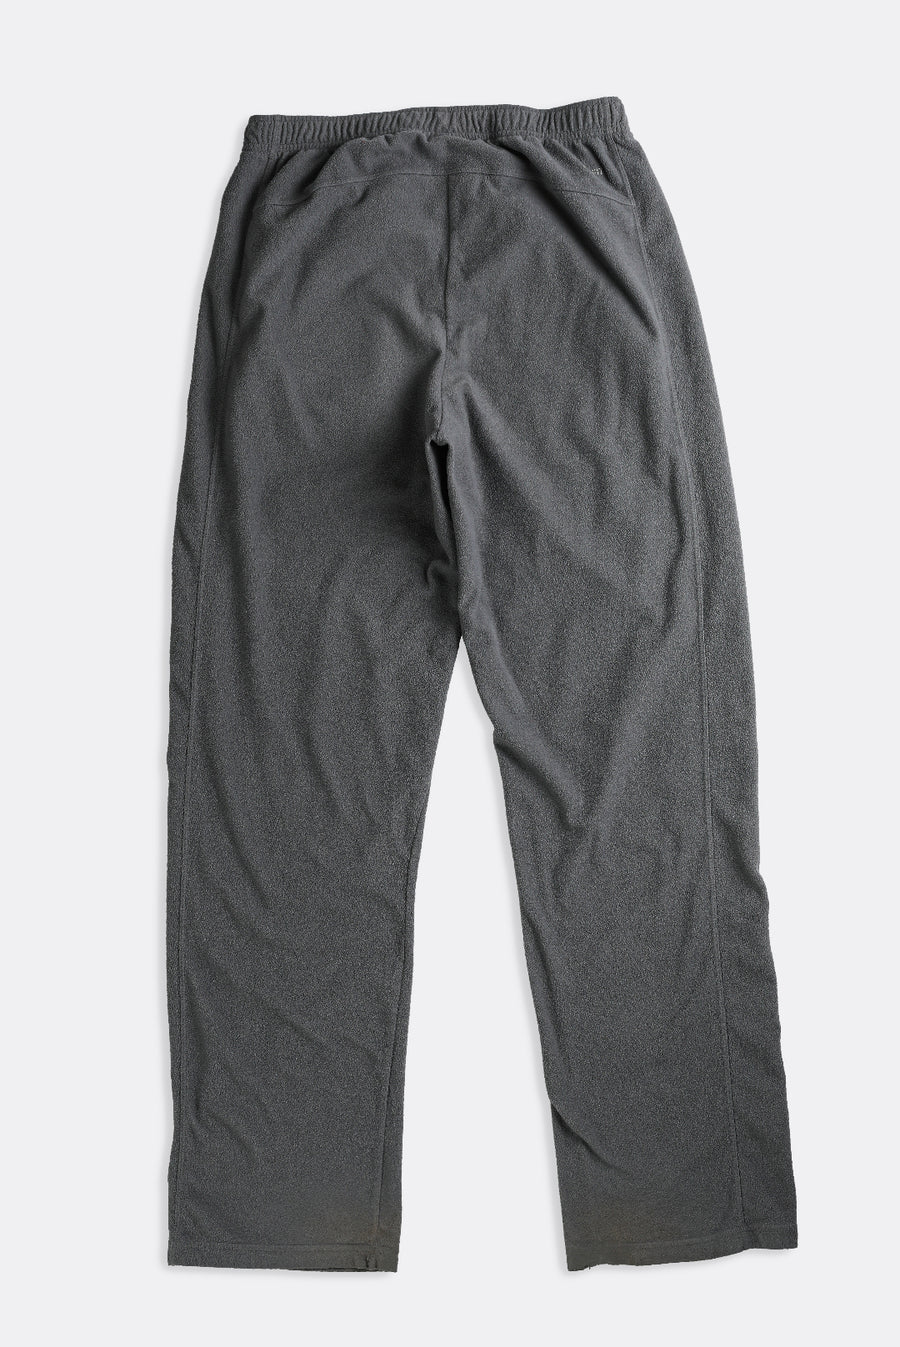 Vintage Nike Fleece Pants - M